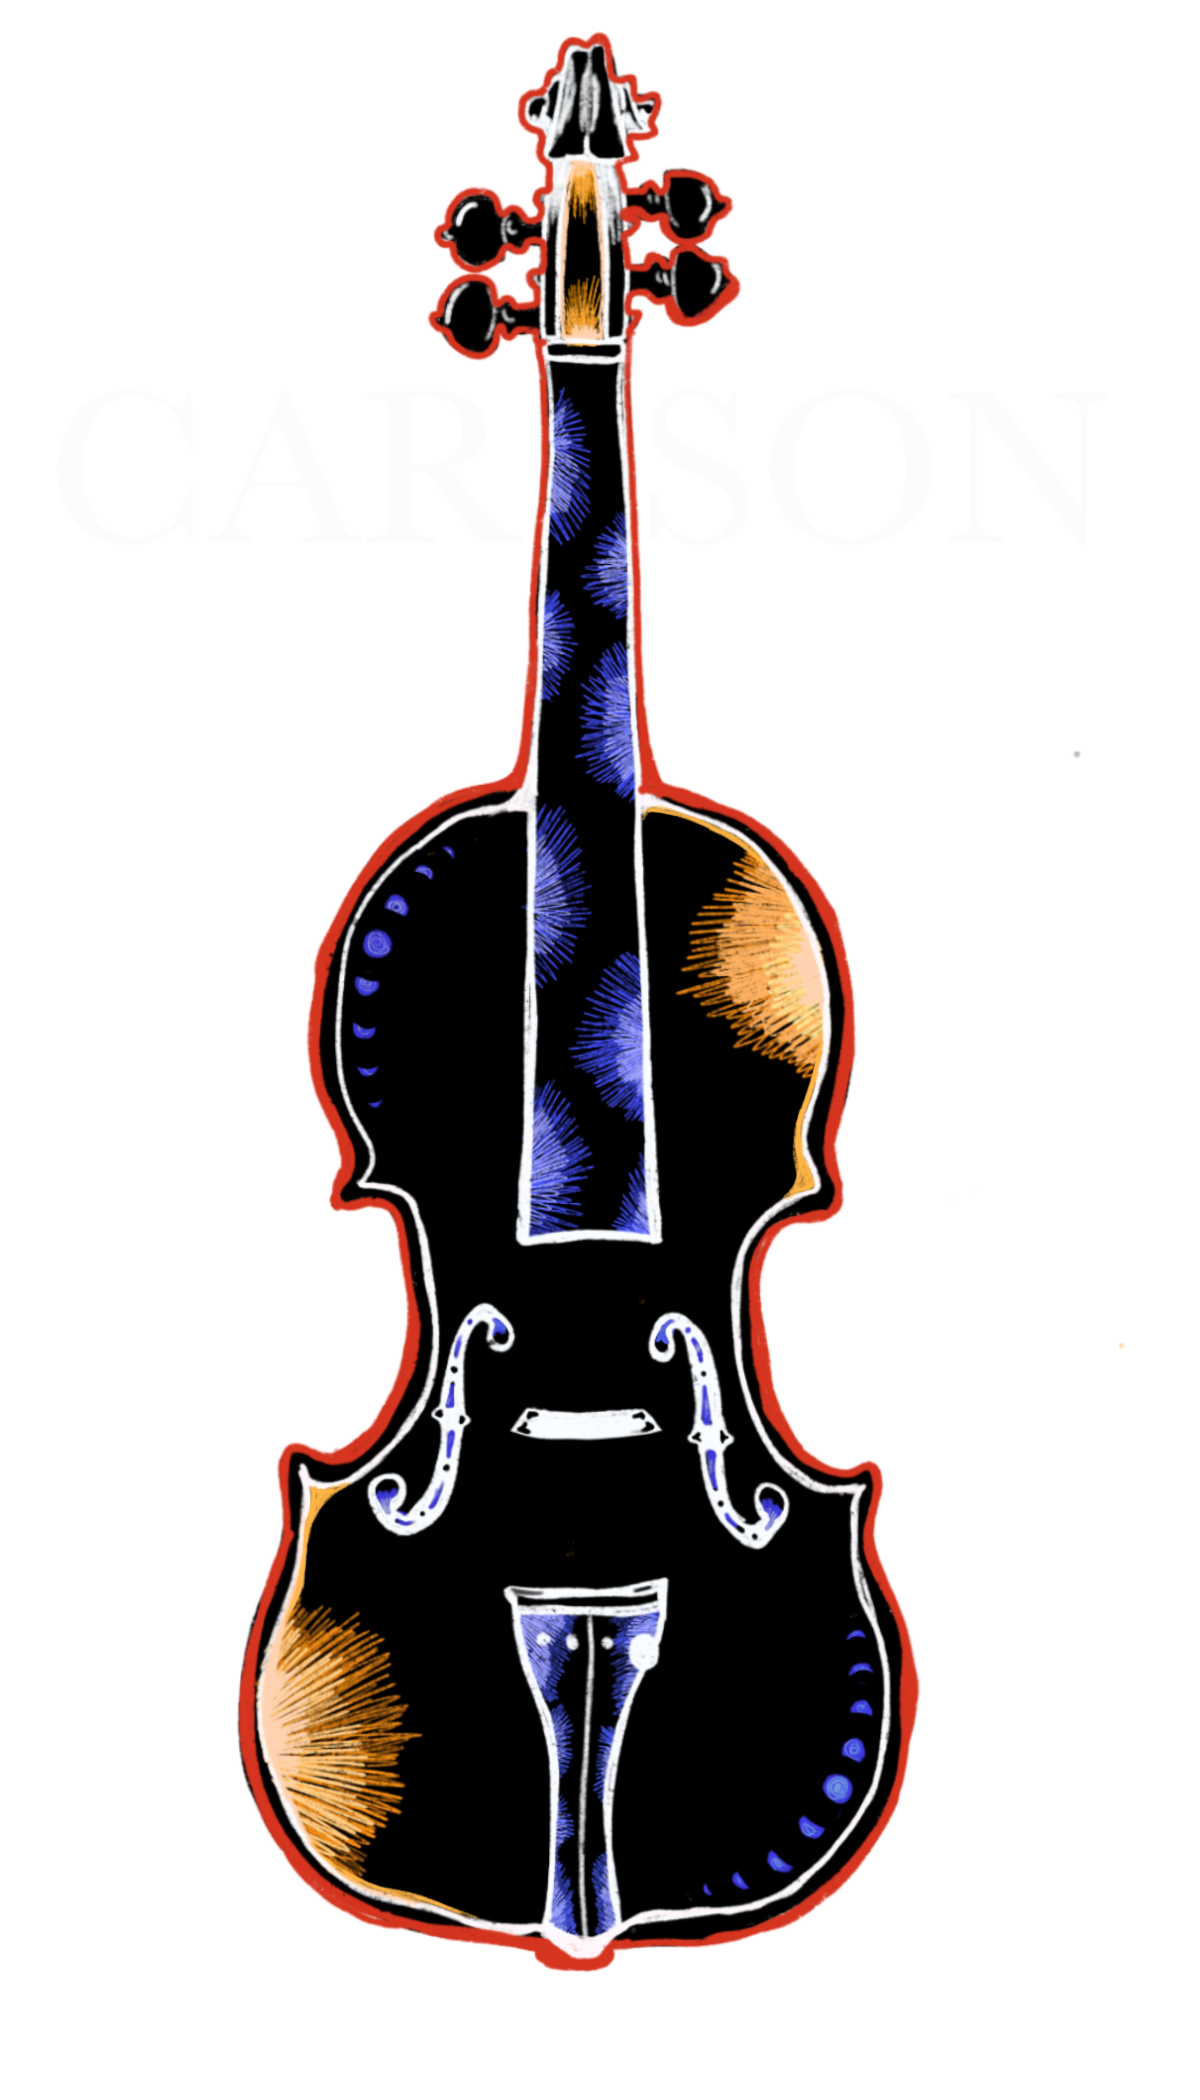 Carson McHaney